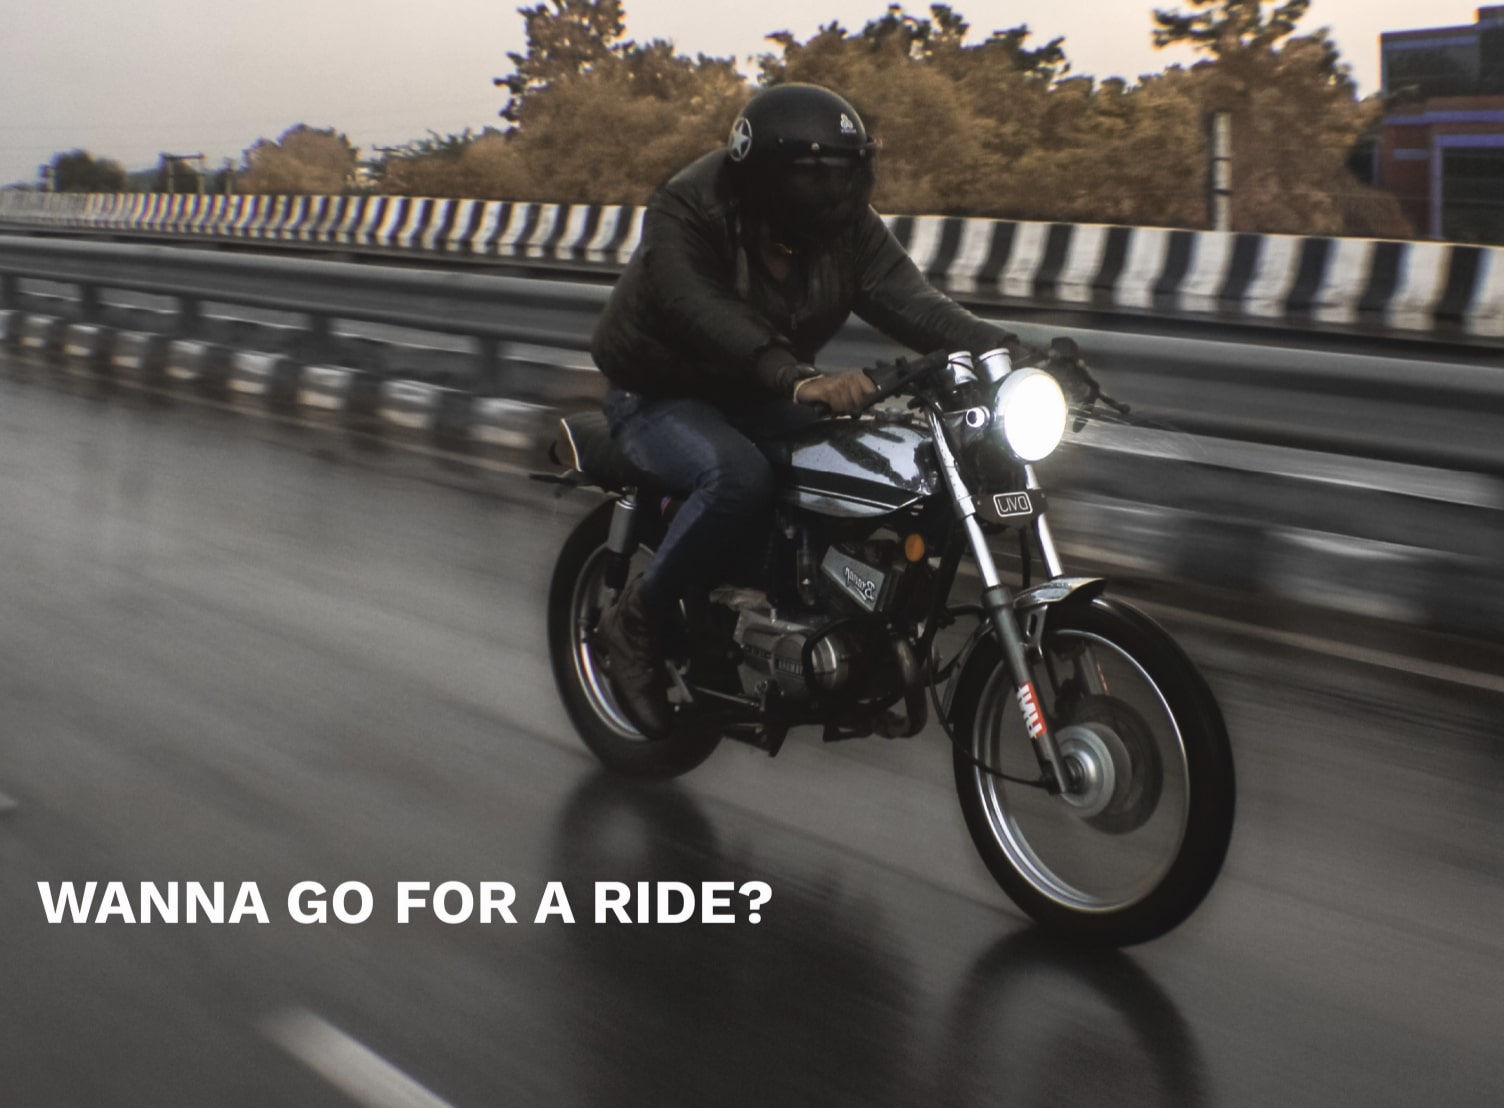 Meet Yamaha RX 100 DVIJ Cafe Racer by Akshat Sharma - back